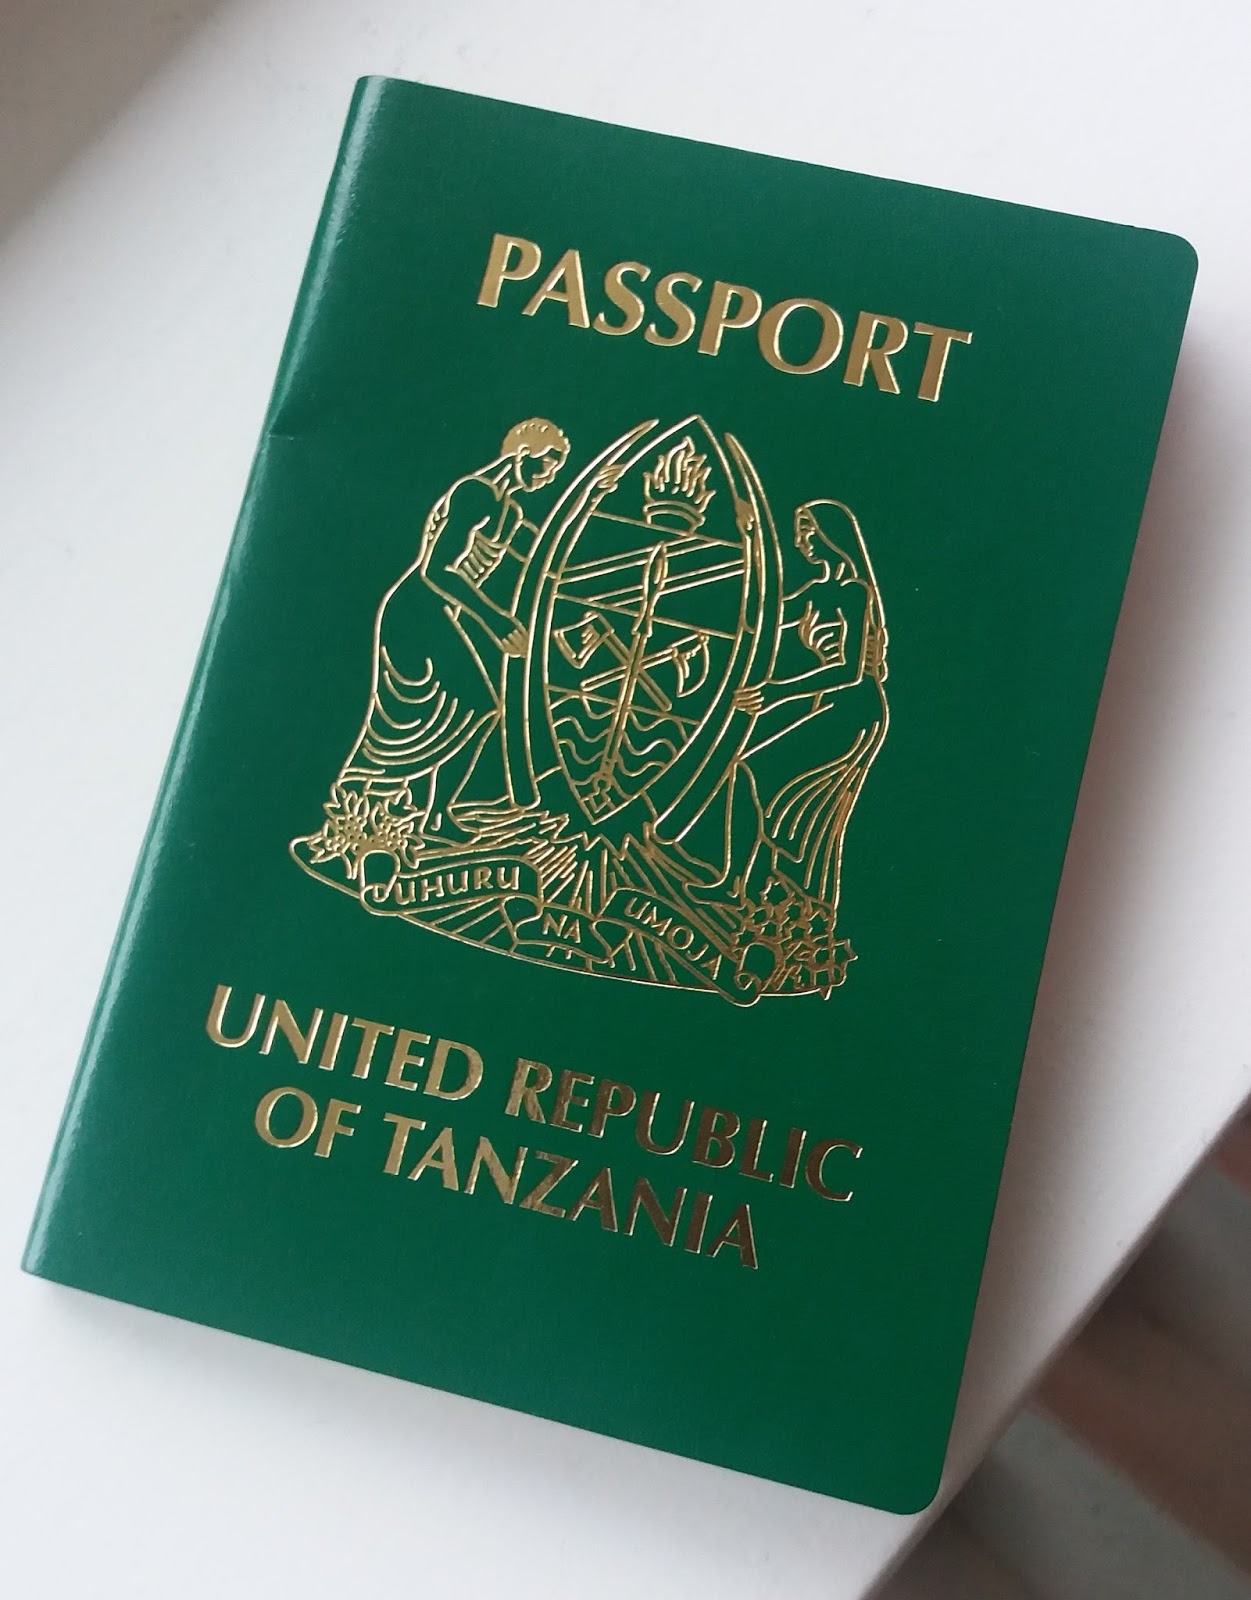 Vietnam visa requirement for Tanzanian